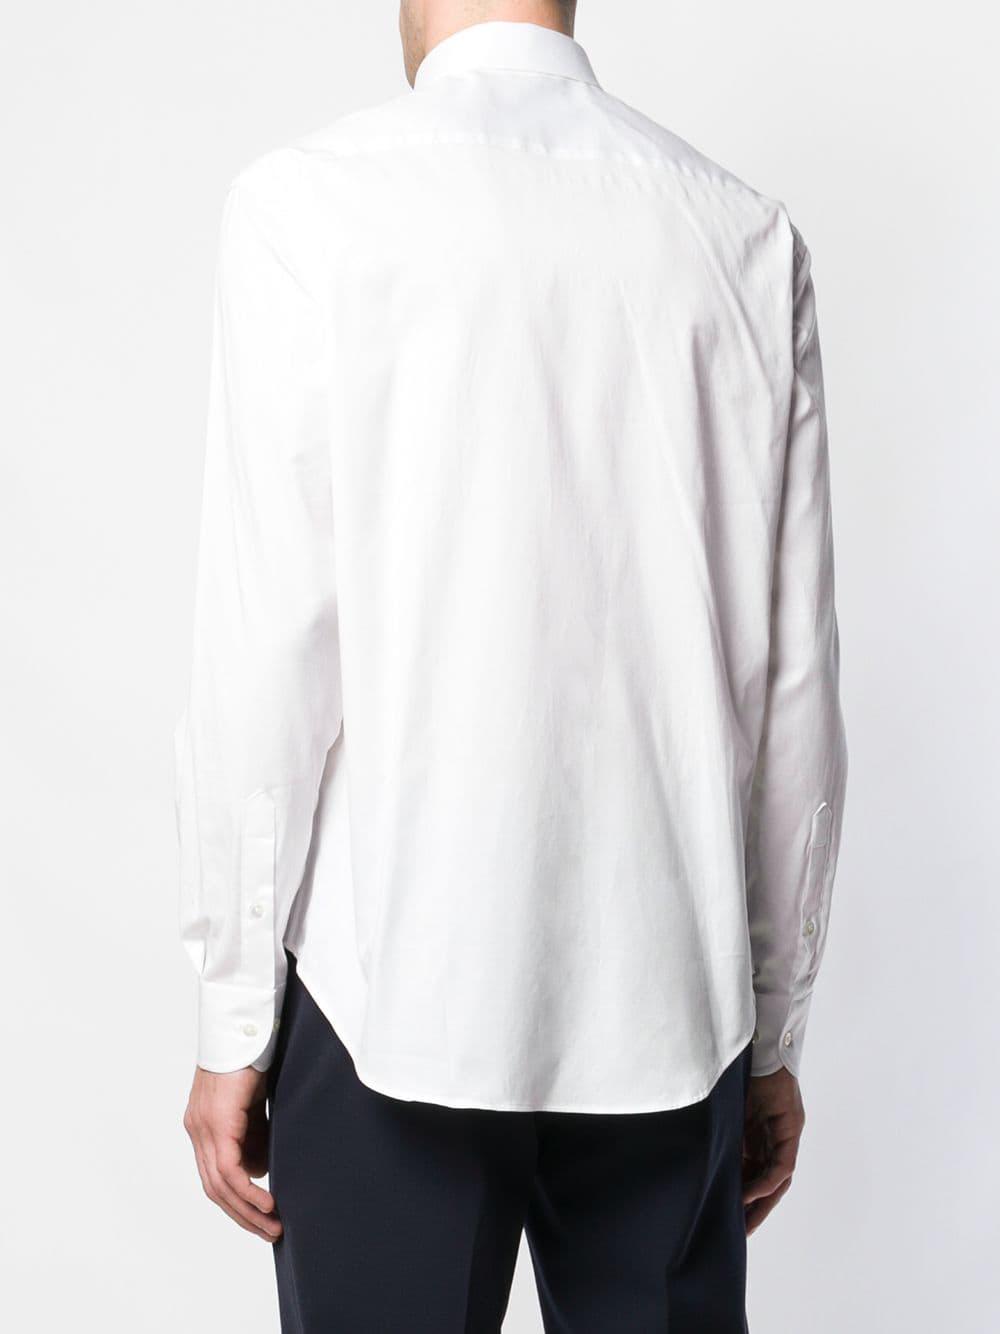 Emporio Armani Button Down Shirt in White for Men - Save 8% - Lyst